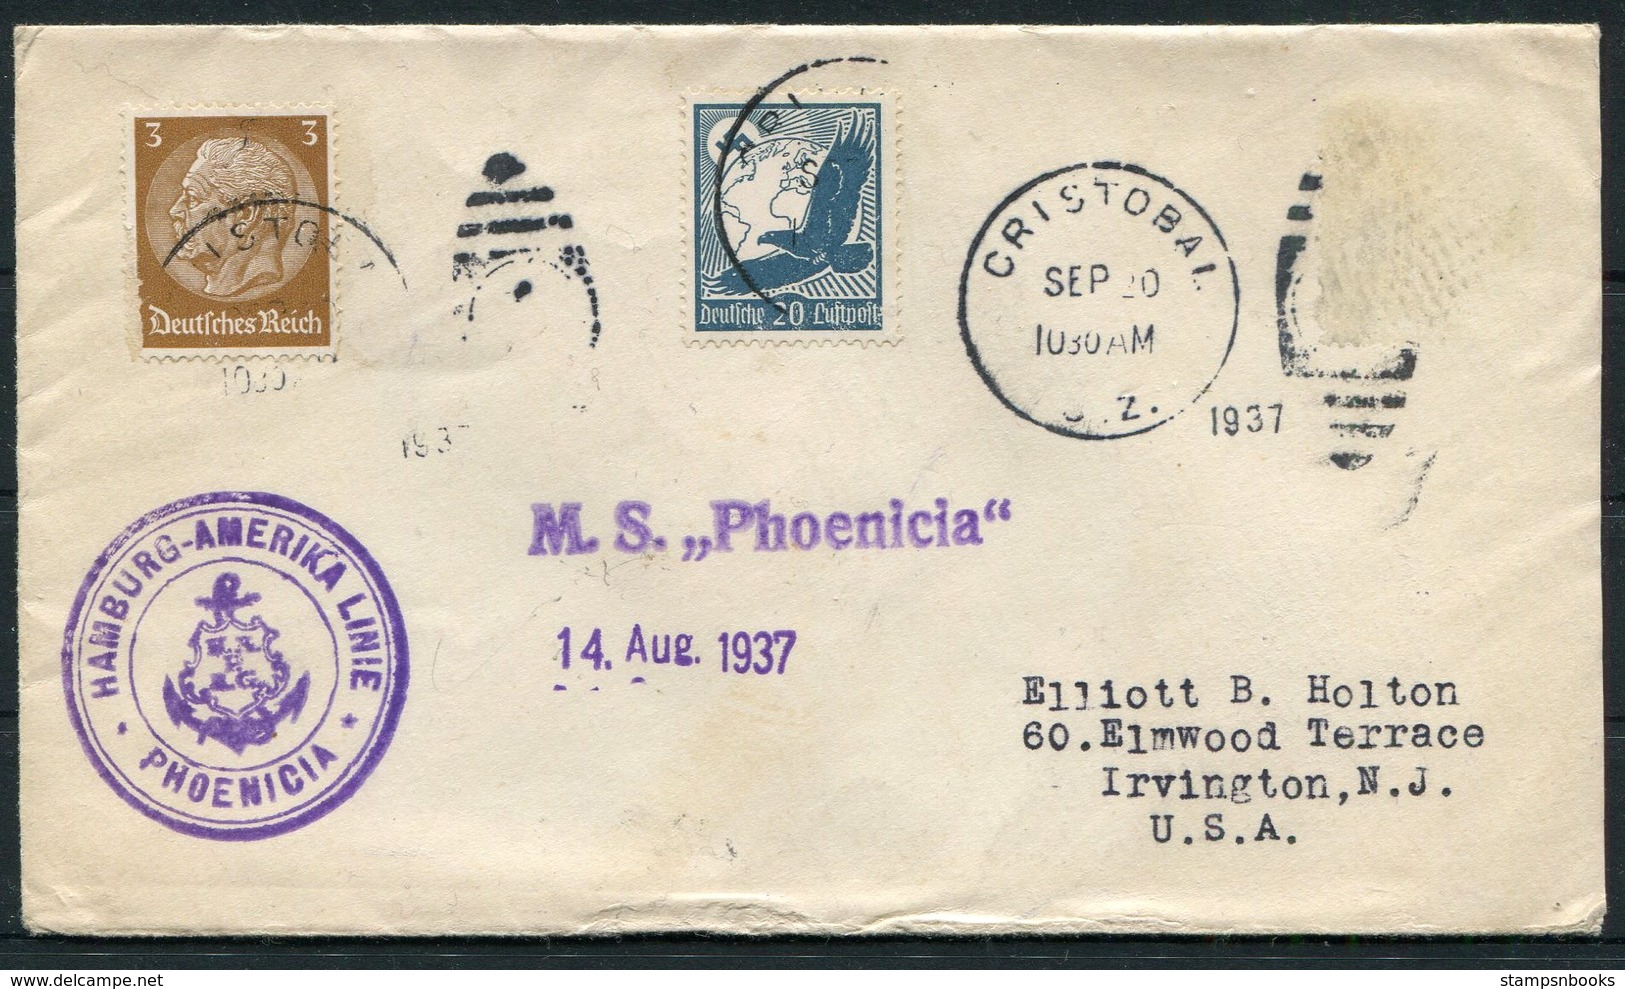 1937 Germany Seepost Hamburg-Amerika Linie Ship Cover MS PHOENICIA, Cristobal CZ - Covers & Documents